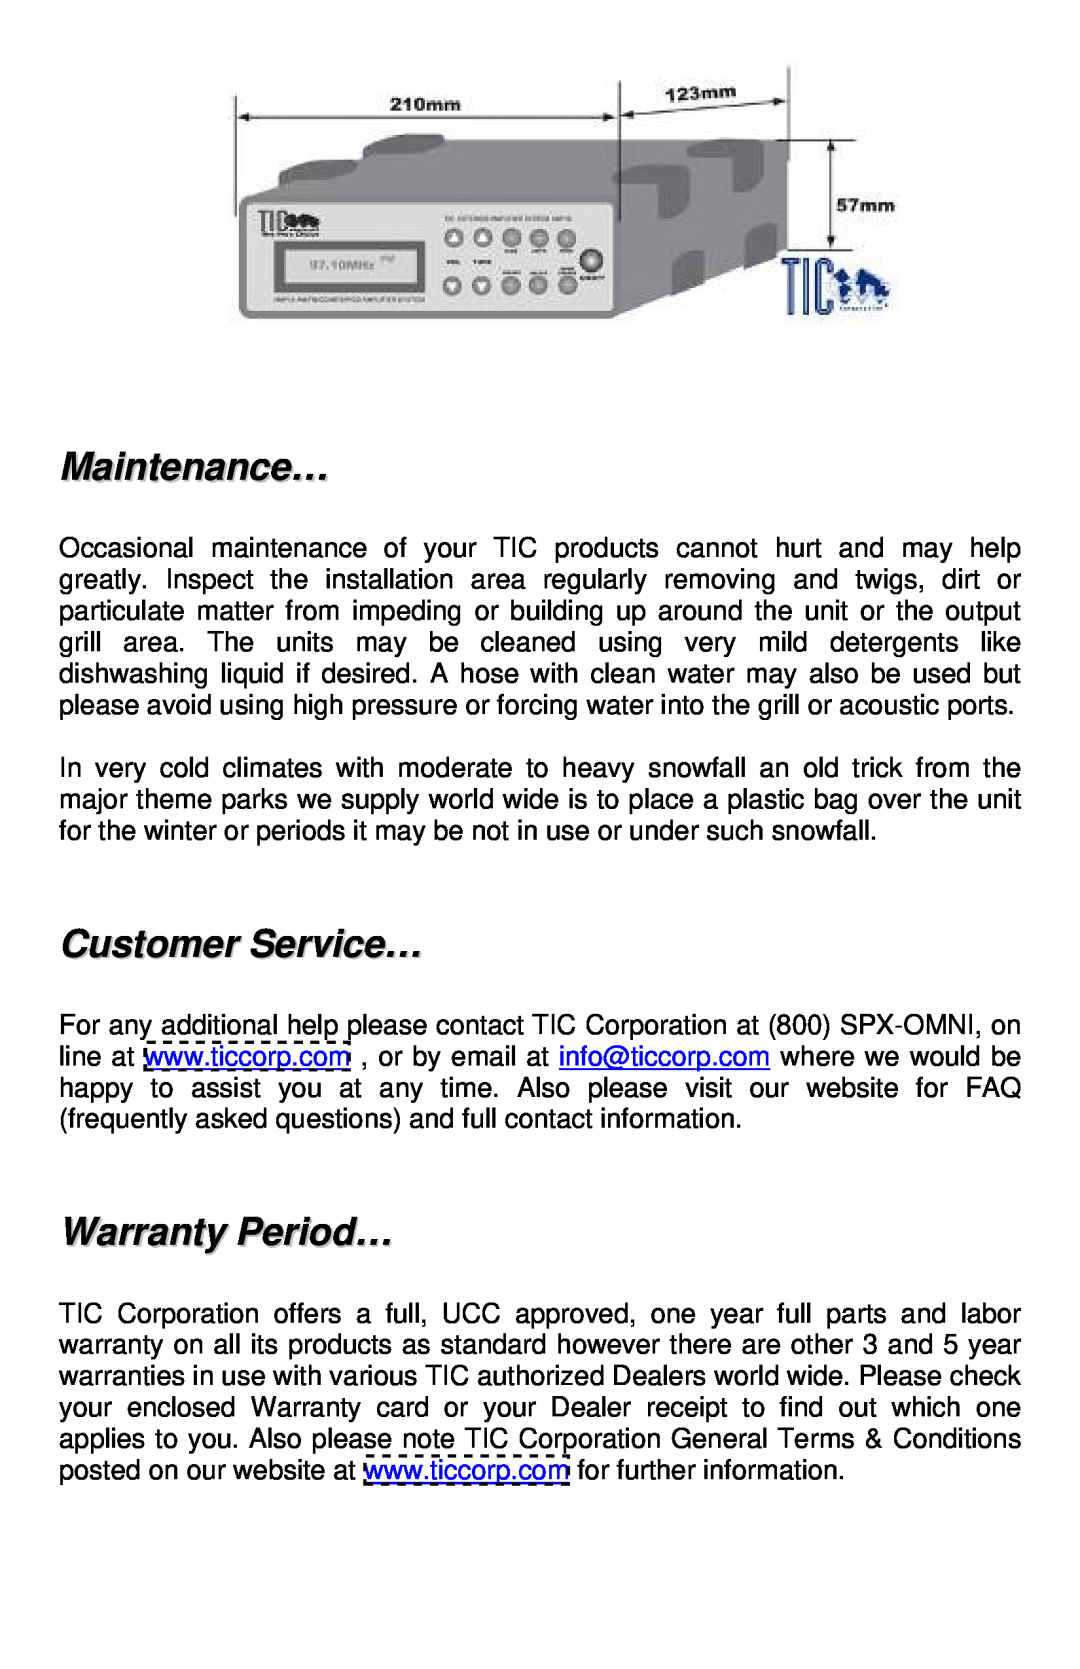 TIC AMP10 manual Maintenance…, Customer Service…, Warranty Period… 